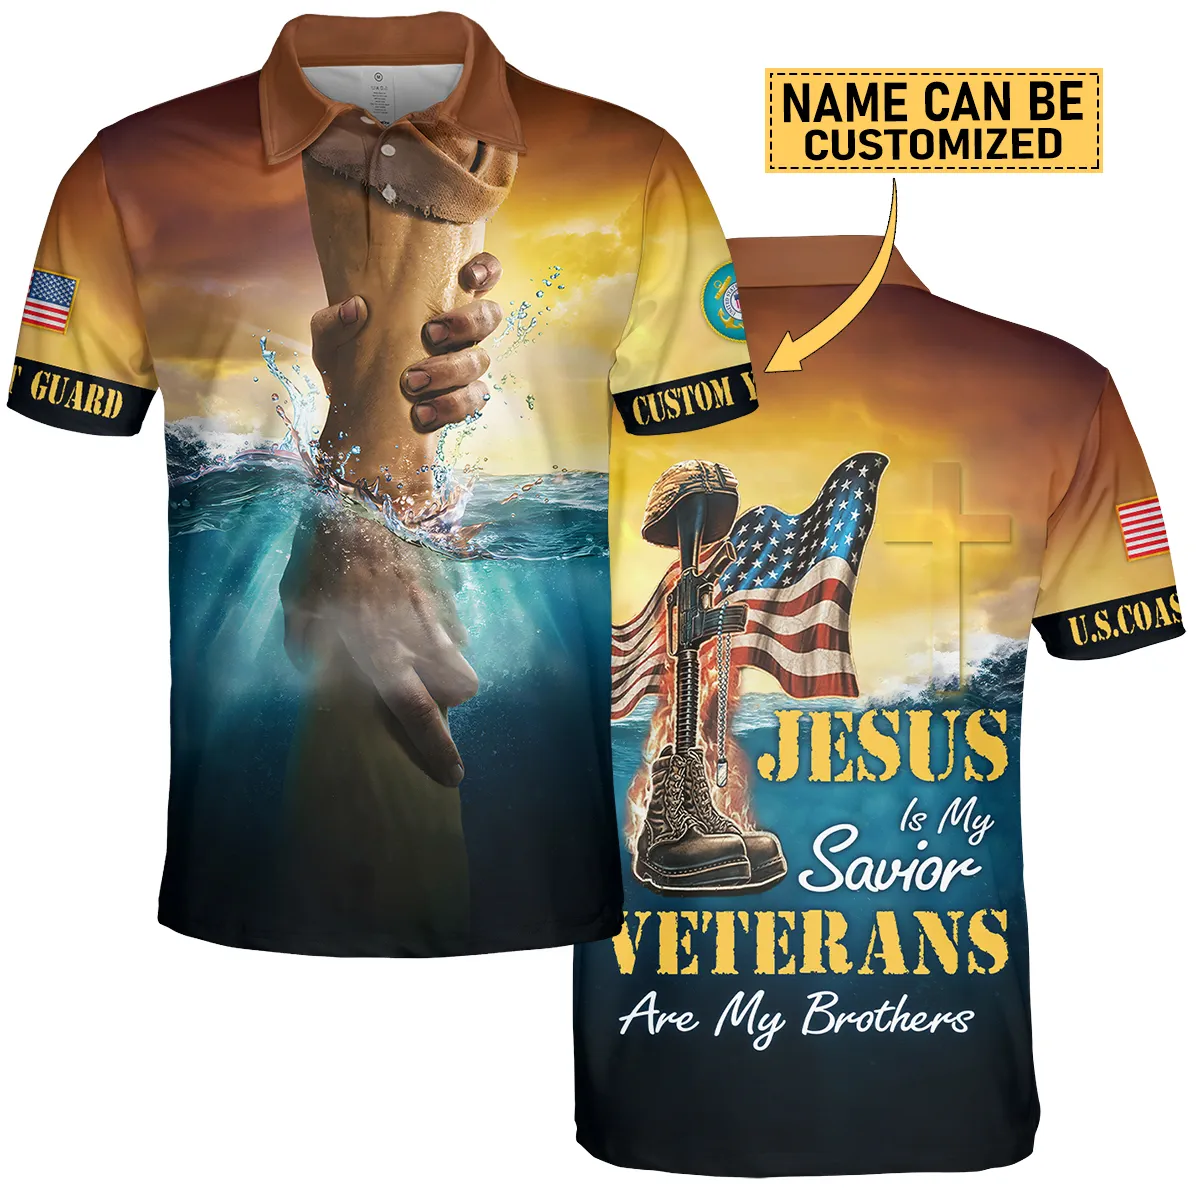 Jesus Is My Savior Veterans Are My Brothers Custom Name U.S. Coast Guard All Over Prints Oversized Hawaiian Shirt